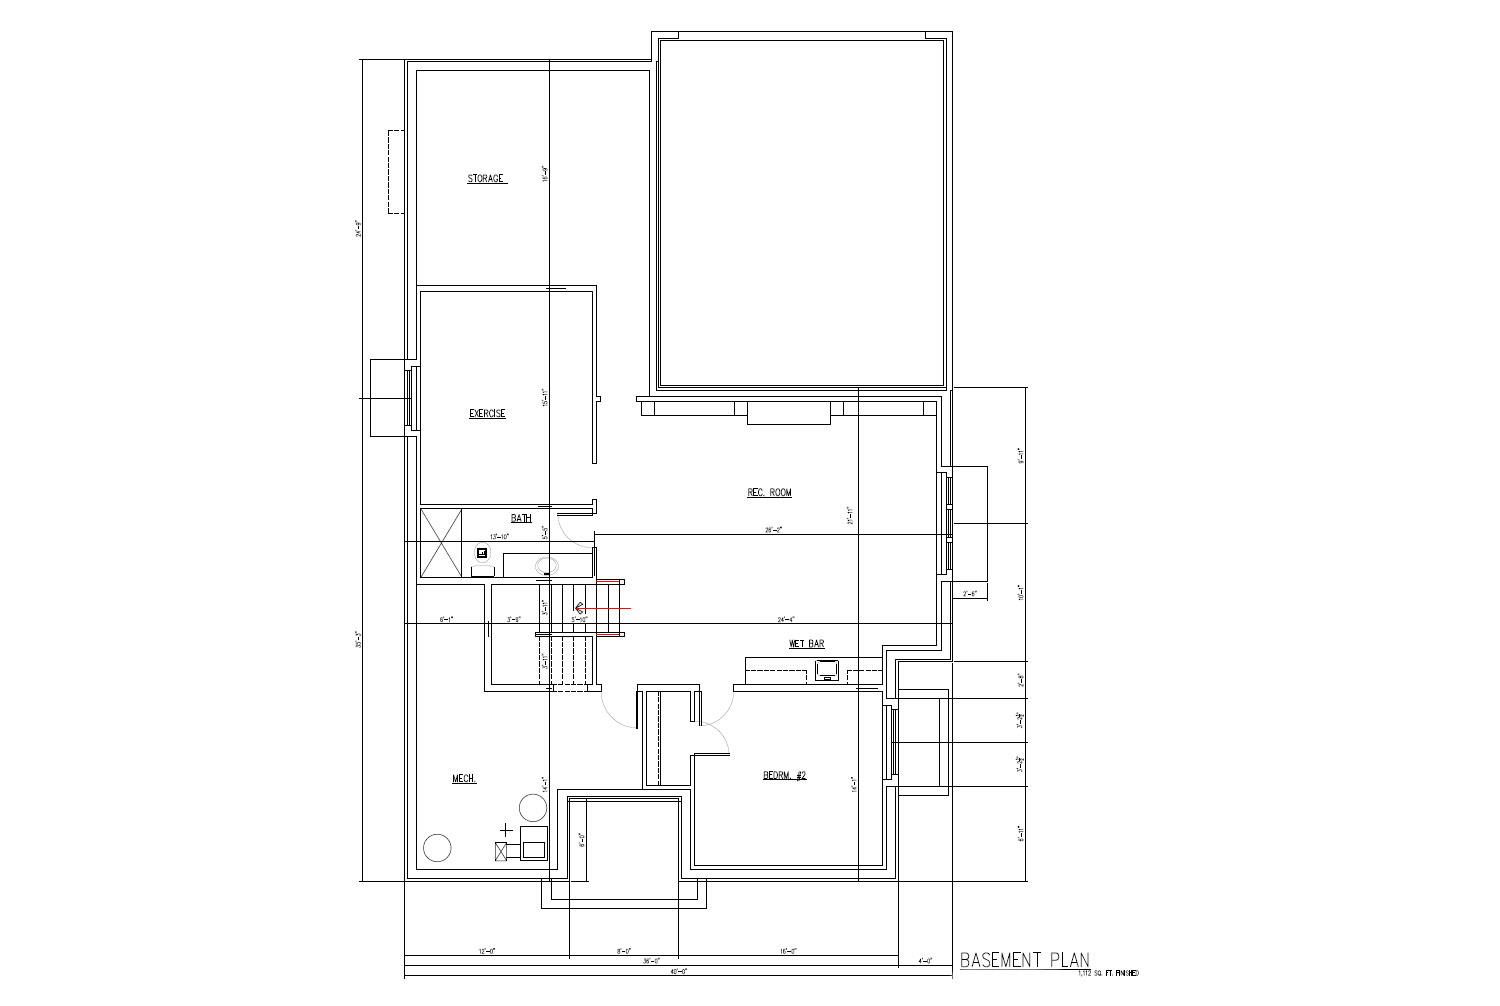 Tammy TJB #677 Home Plan Basement Floor Plan